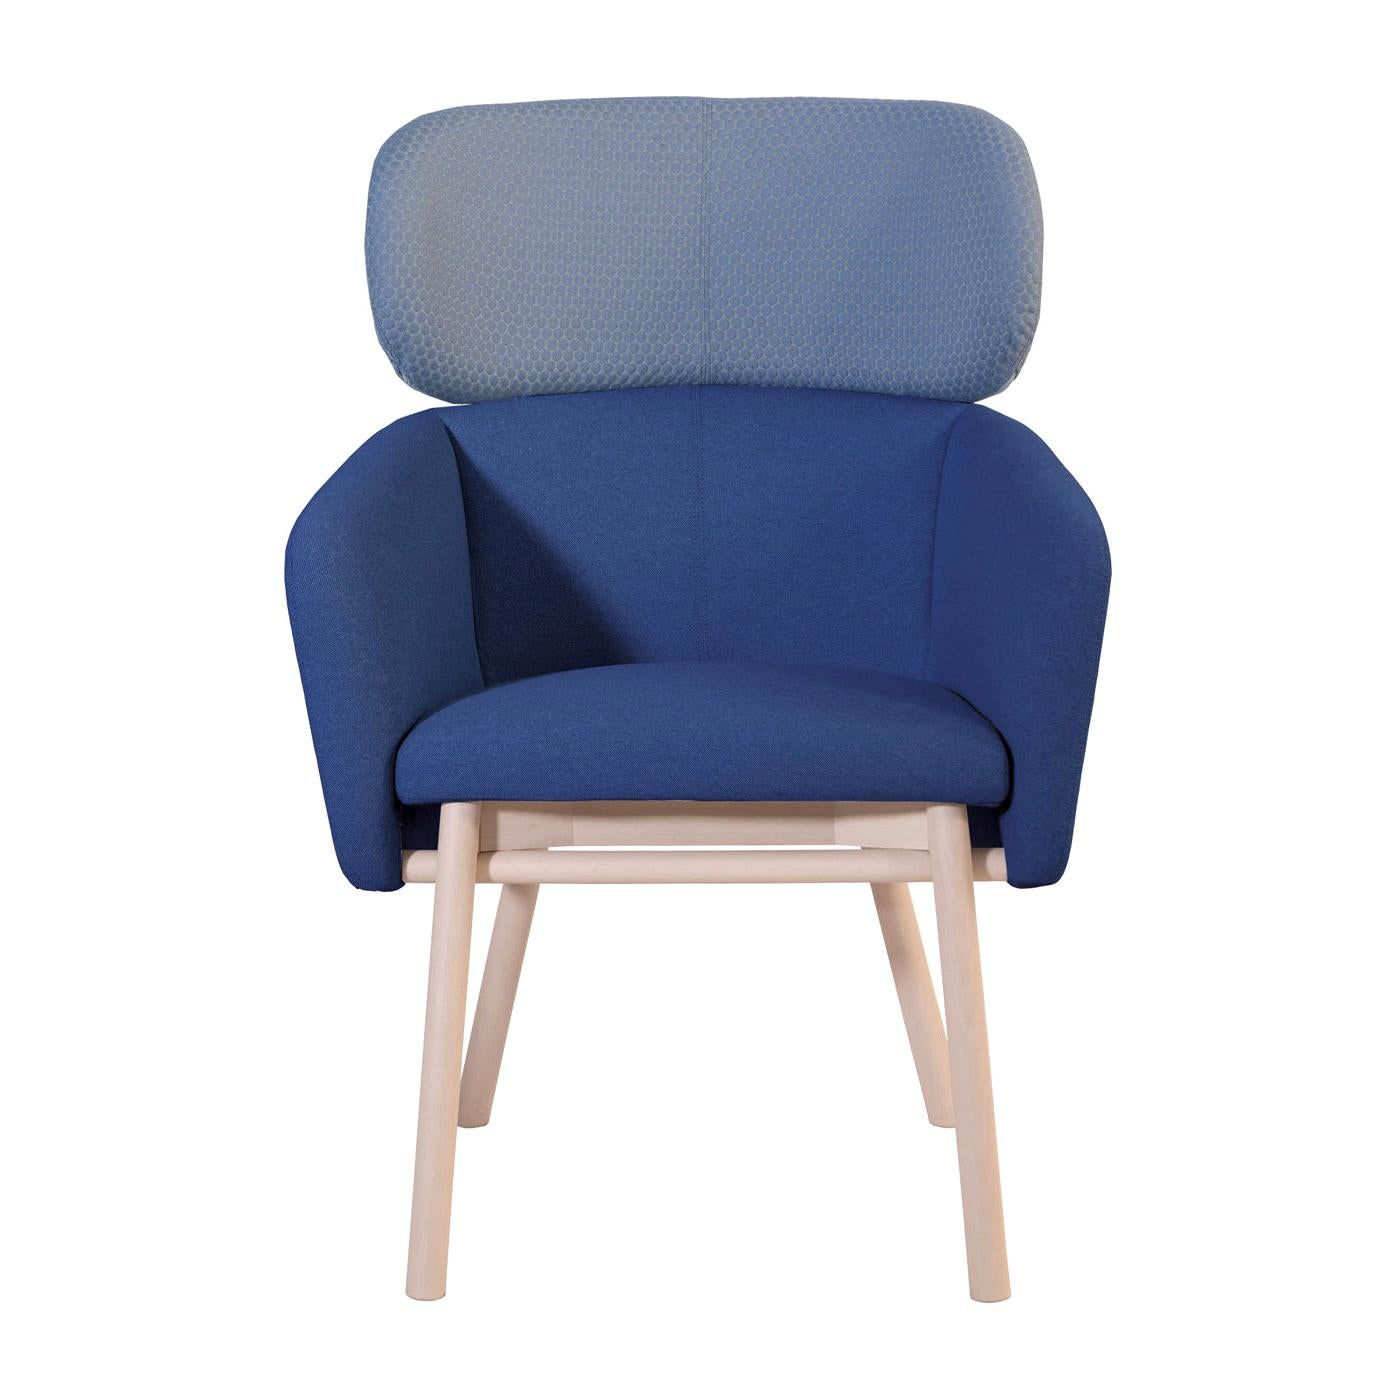 Balù Extra Large Blue and Lightblue Chair by Emilio Nanni